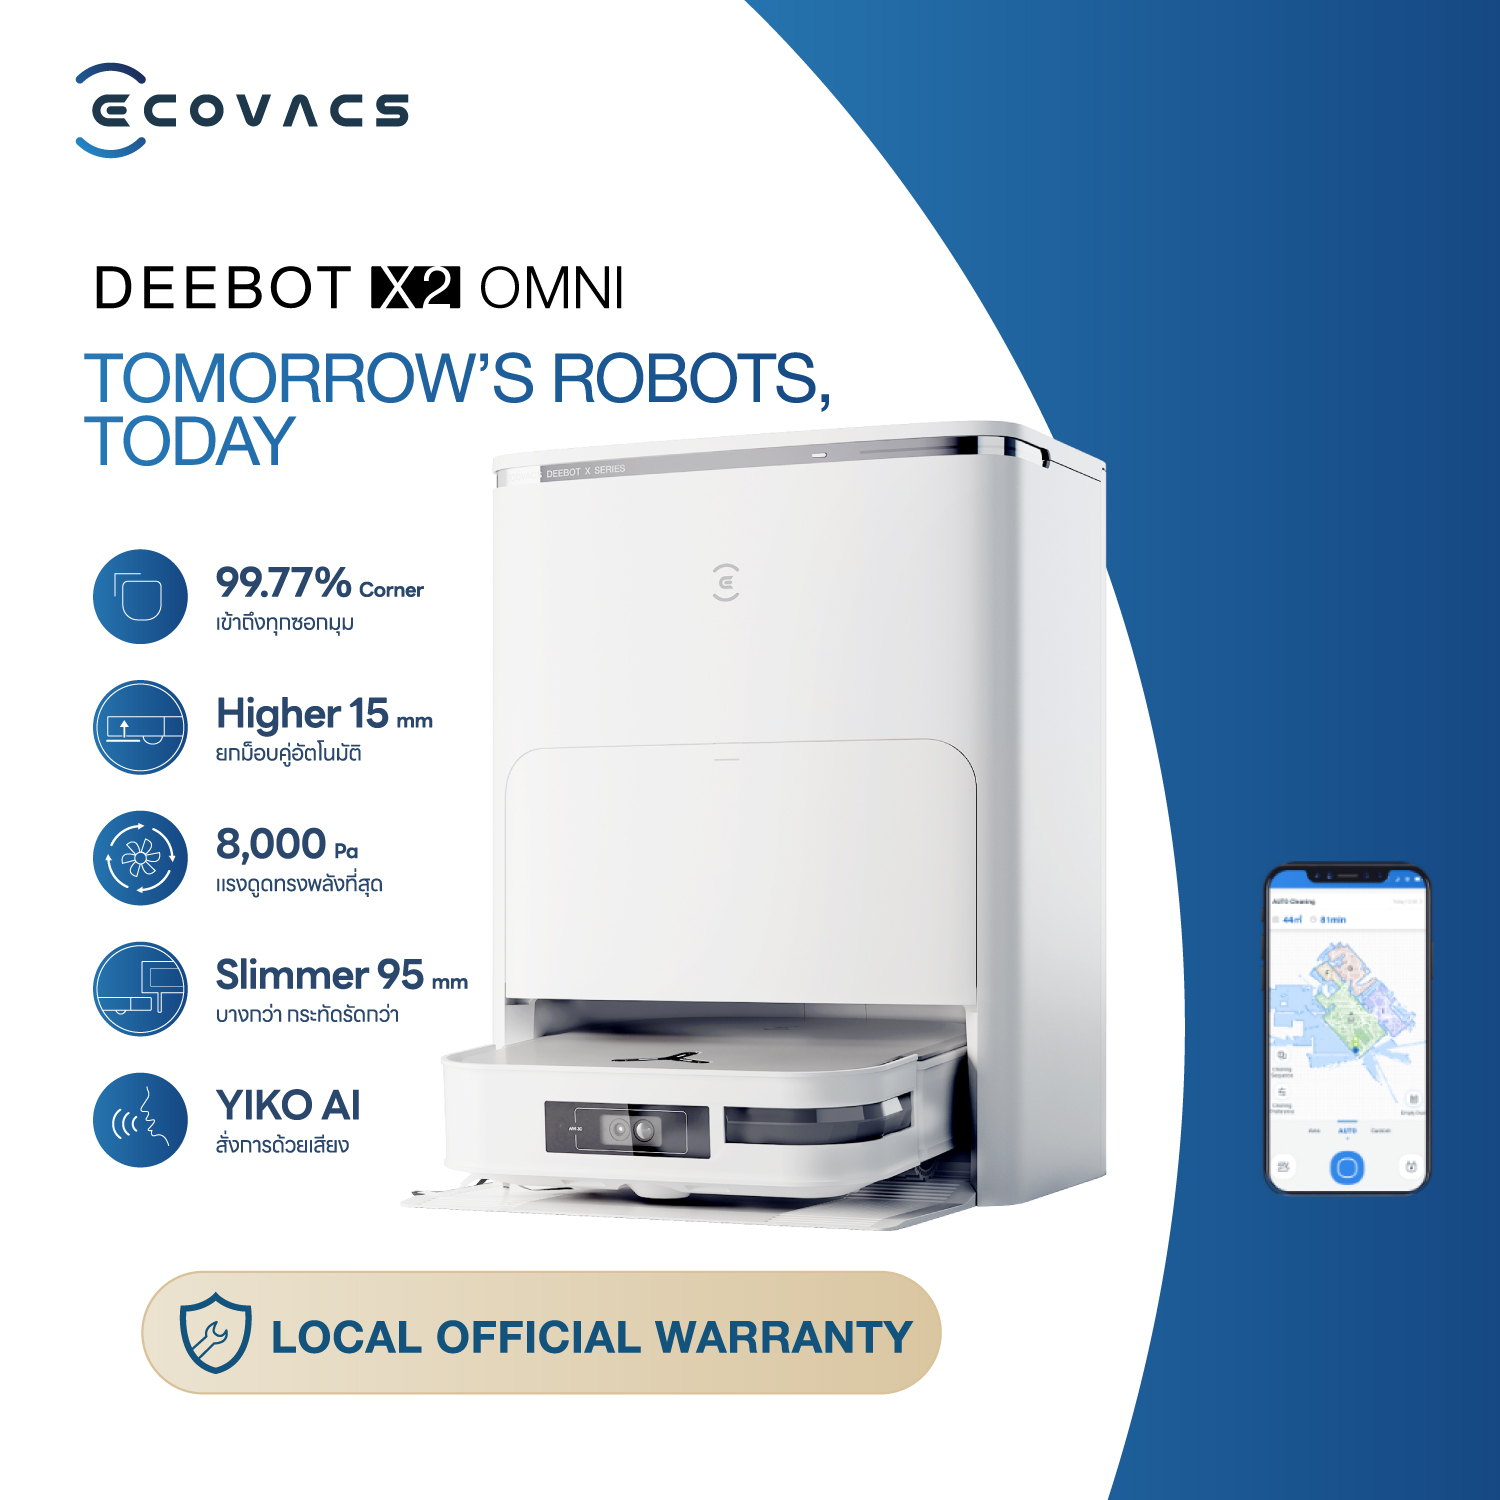 Bangkok Post - ECOVACS Launches Revolutionary DEEBOT X2 OMNI Robot Cleaner